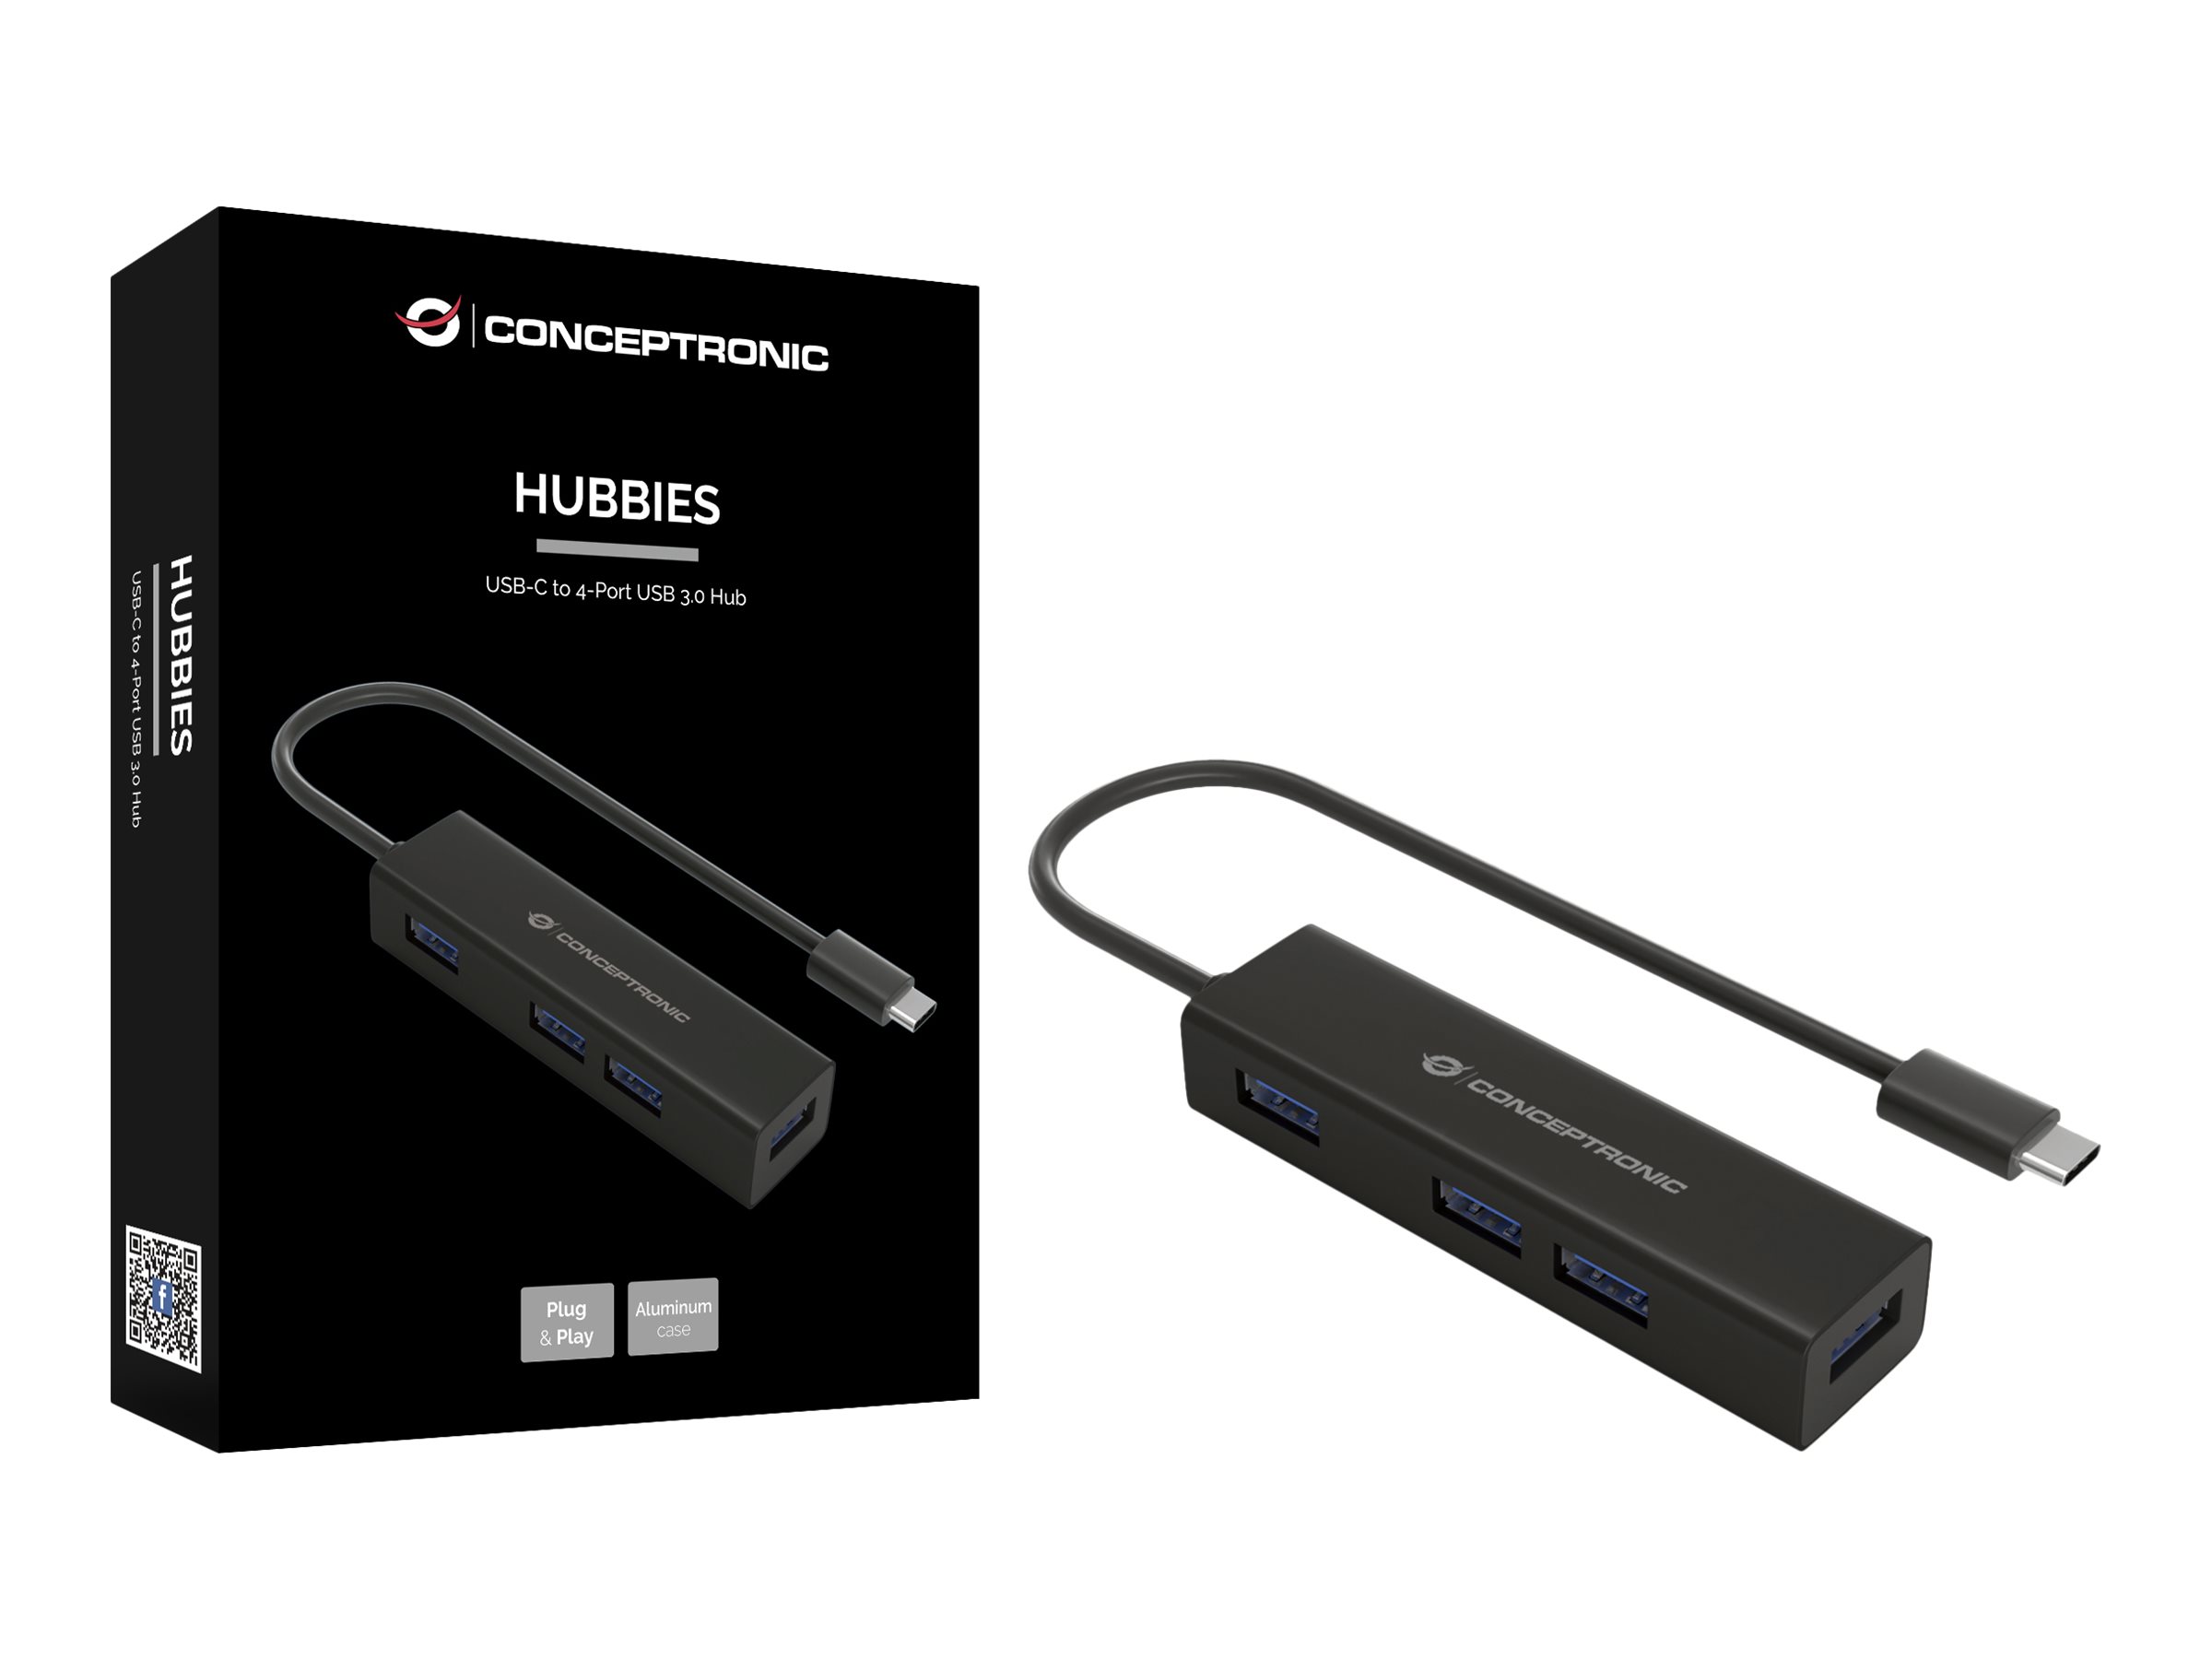 Conceptronic HUBBIES07B - Hub - 4 x SuperSpeed USB 3.0